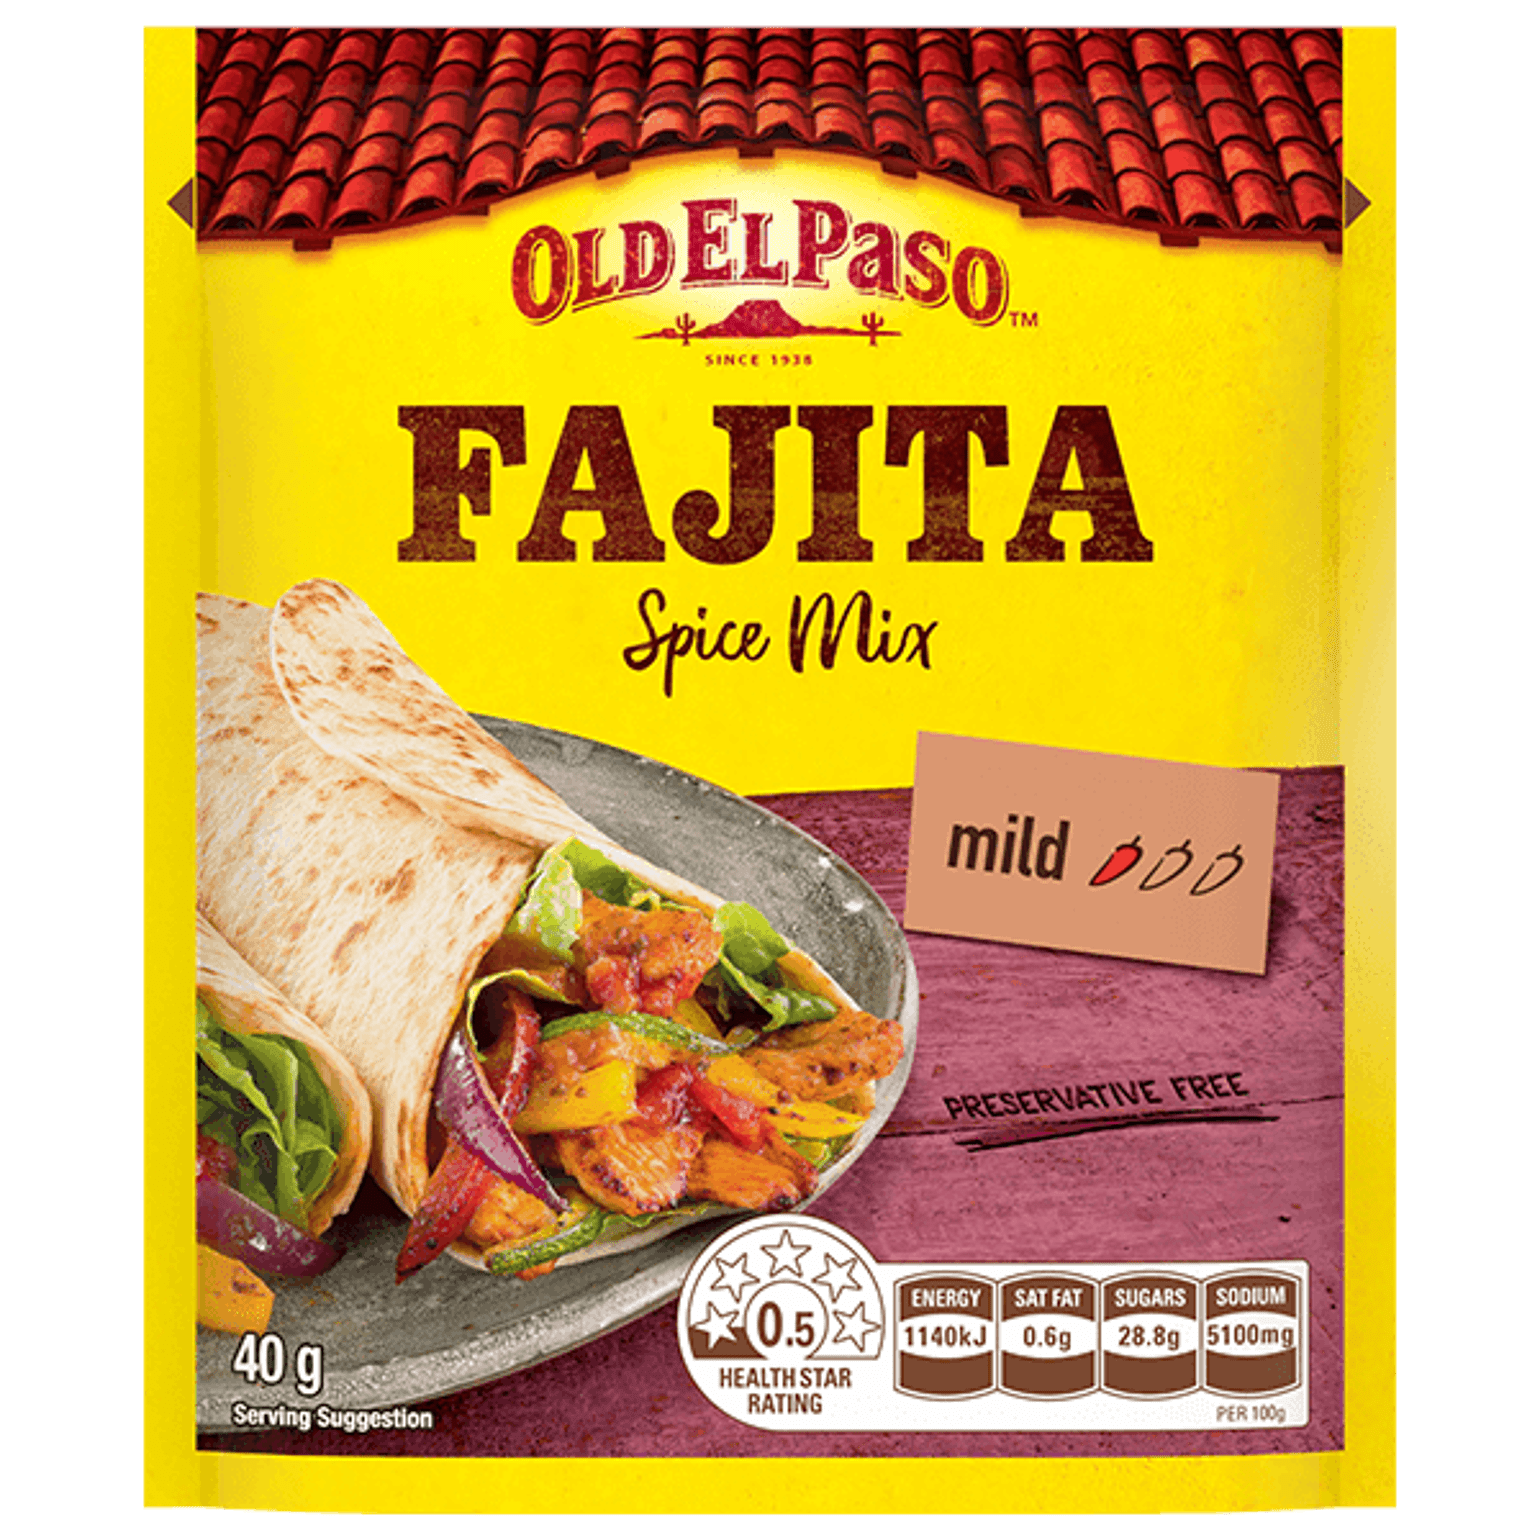 a pack of Old El Paso's mild fajita spice mix (40g)